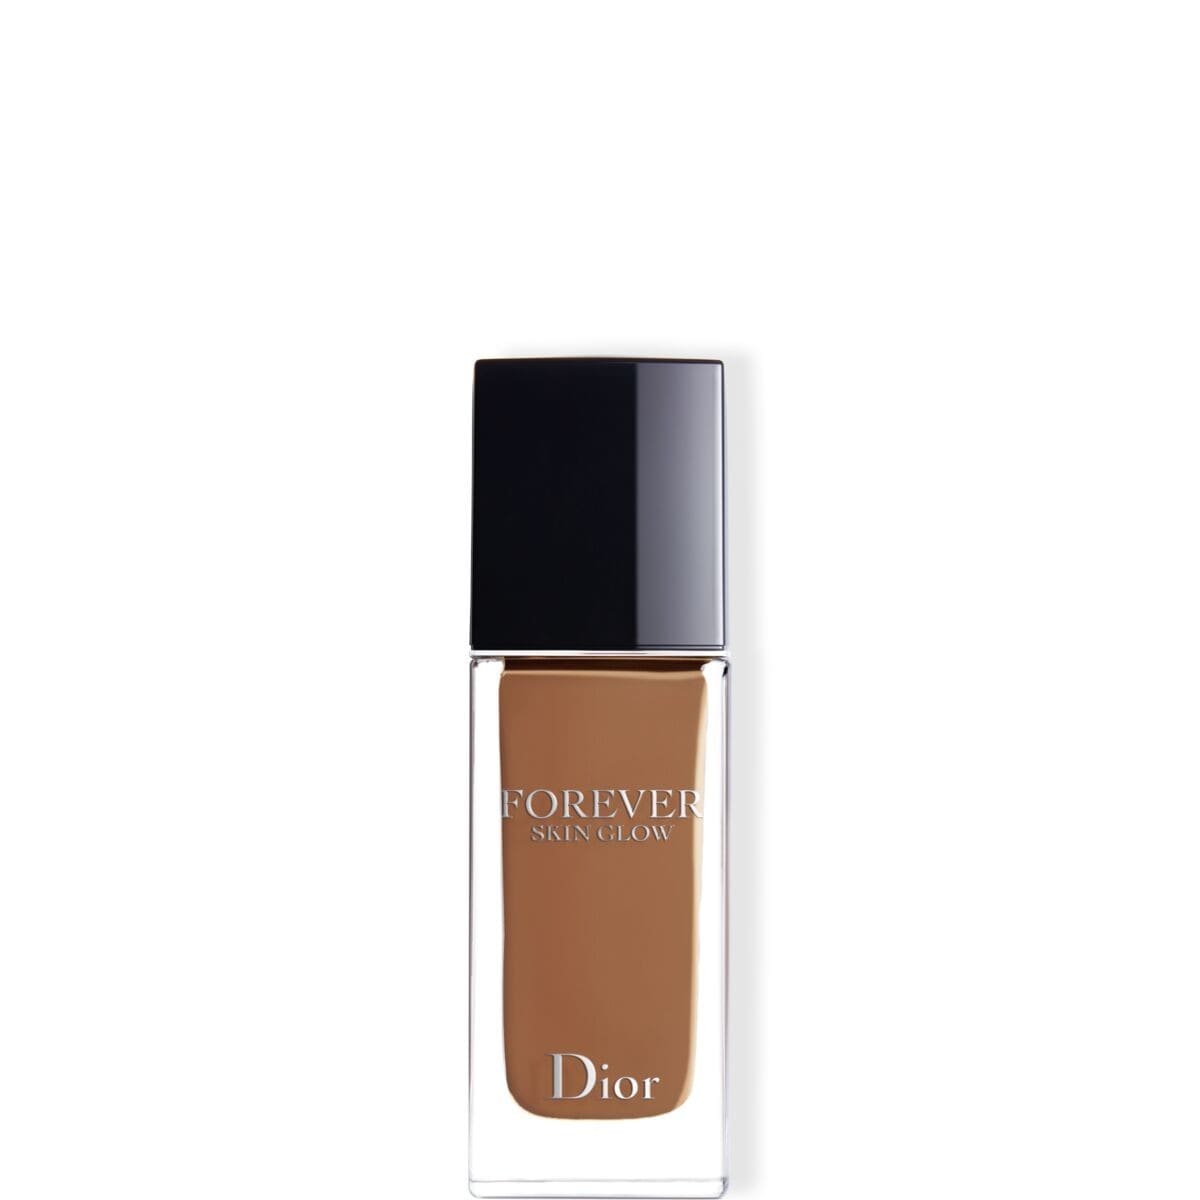 Dior Forever Skin Glow Foundation, No. 6.5n - neutral